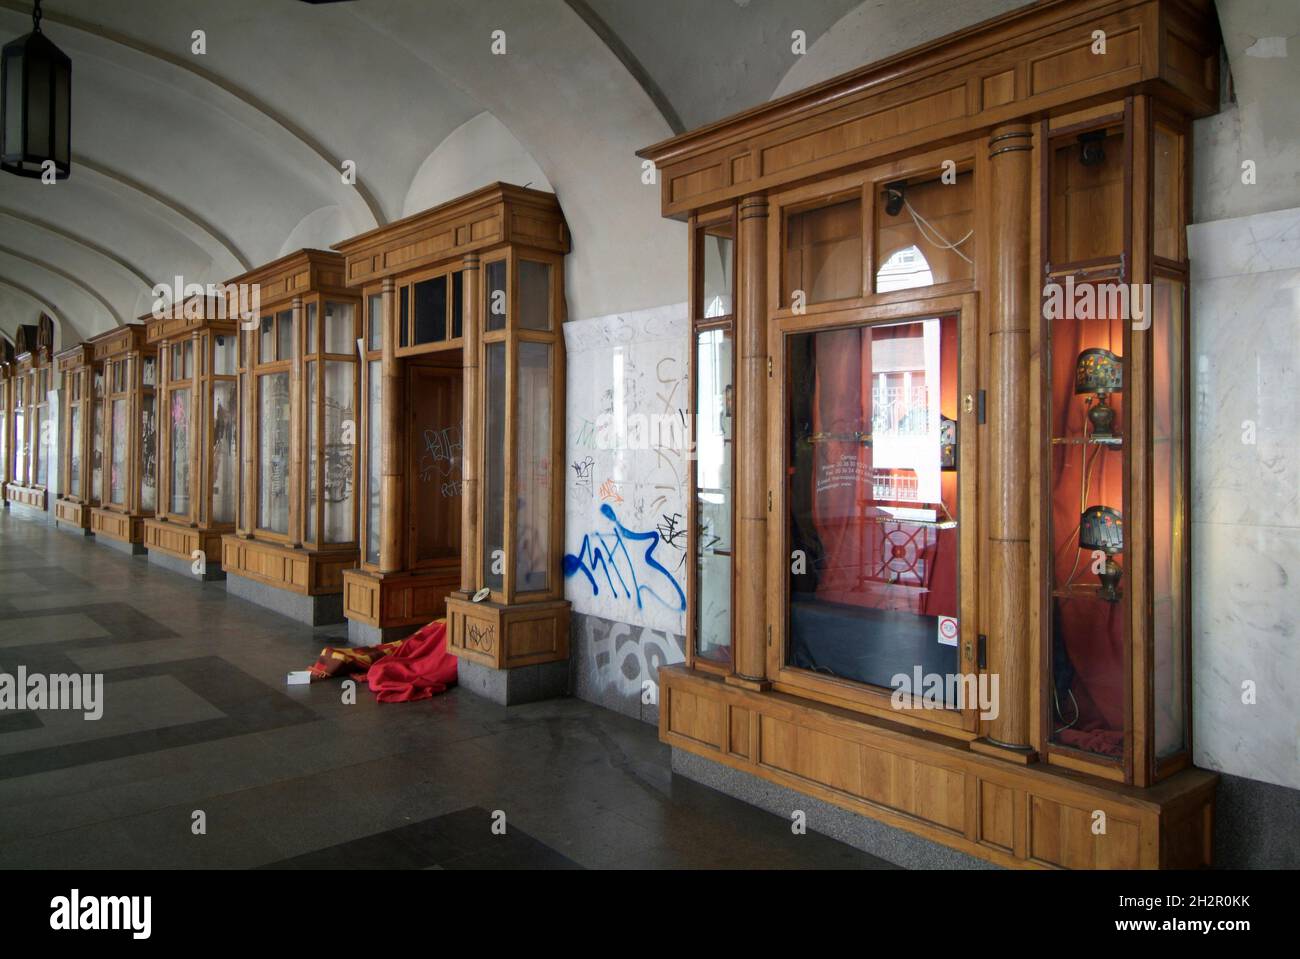 Ungarn, Budapest, Innenstadt, Obdachlose schlafen in einer Arkade, József attila utca | Hungary, Budapest, city center, homeless person sleeping in an Stock Photo